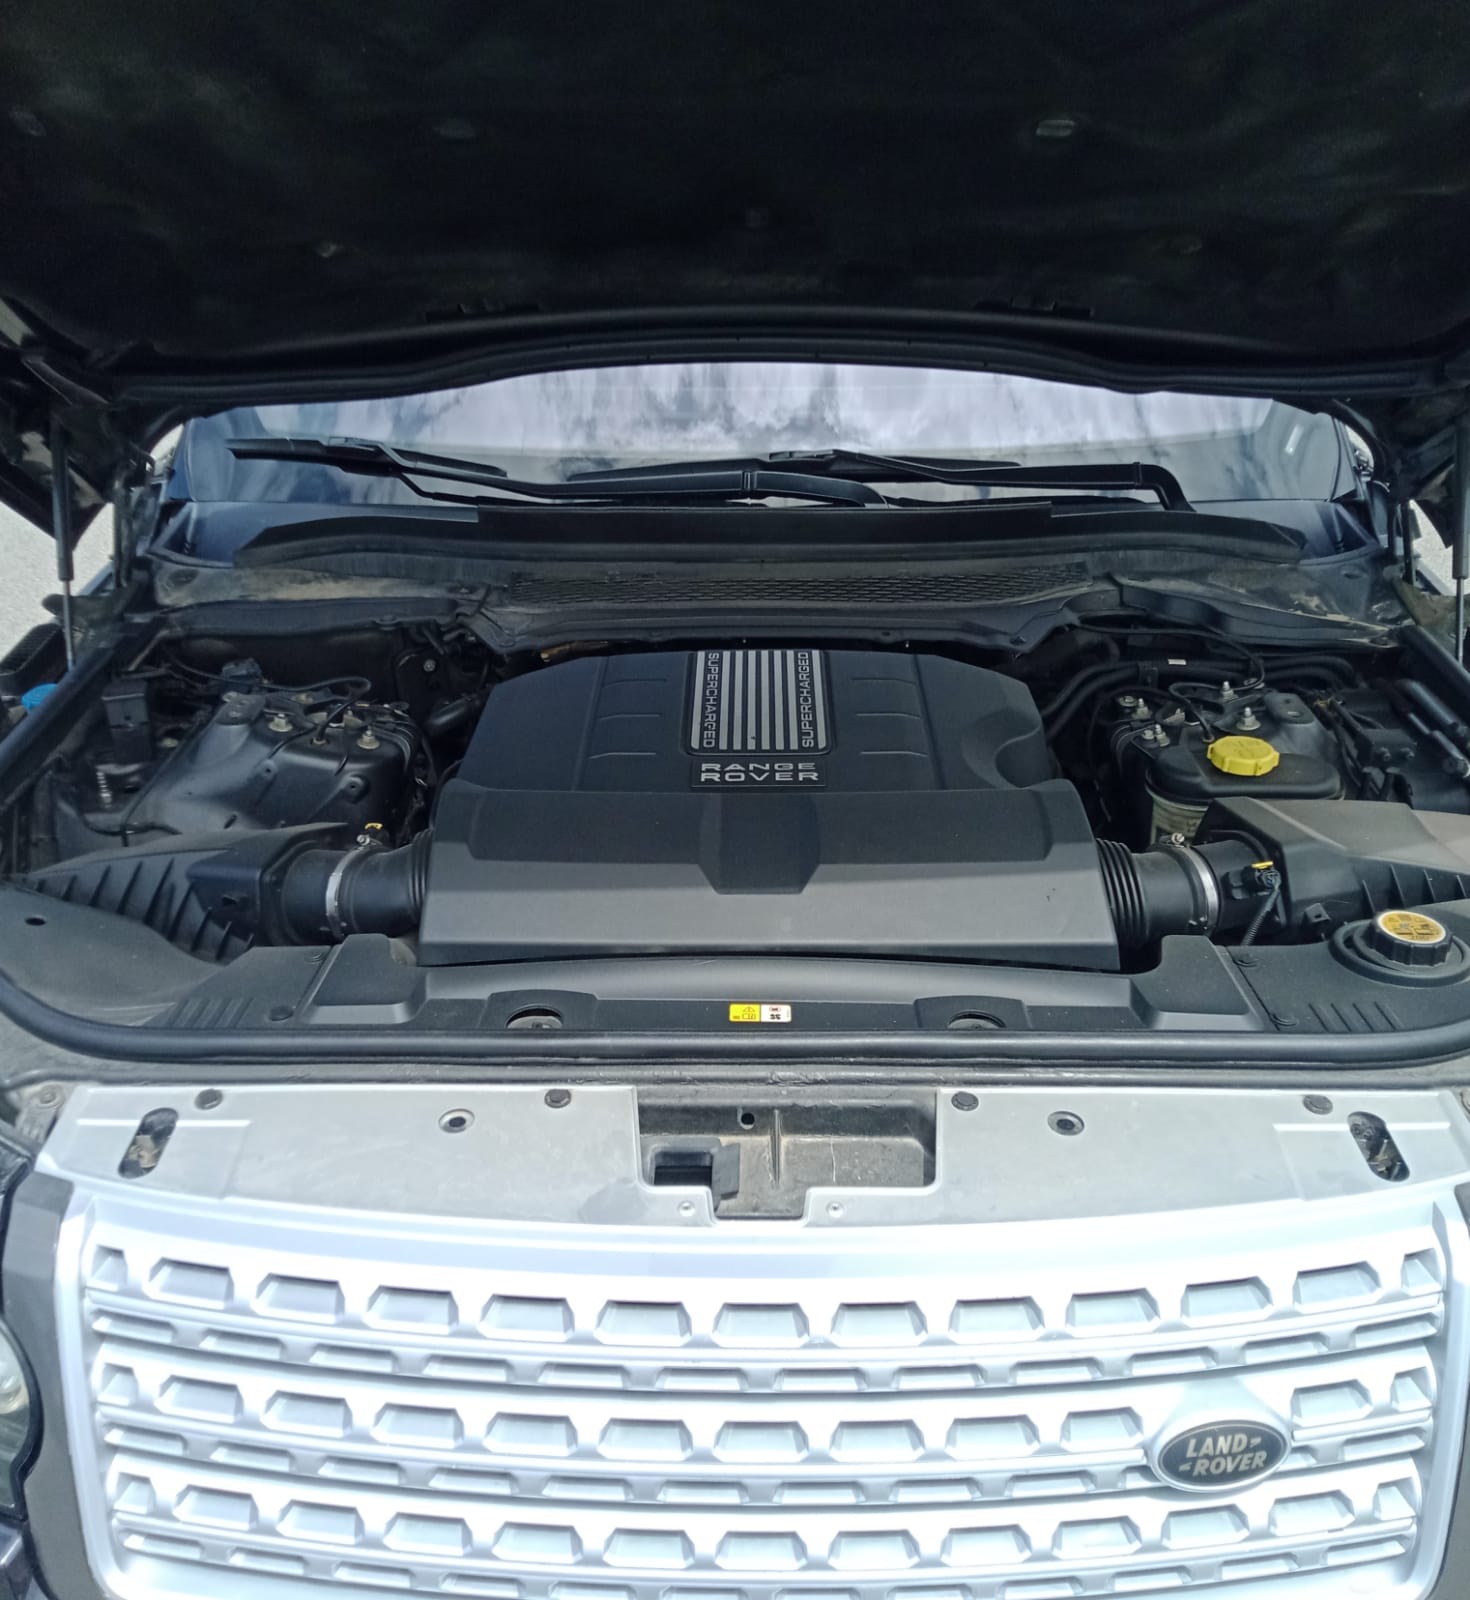 Range Rover Vogue SE Autobiography supercharged V8 5.0L Full Option Model 2013-pic_6